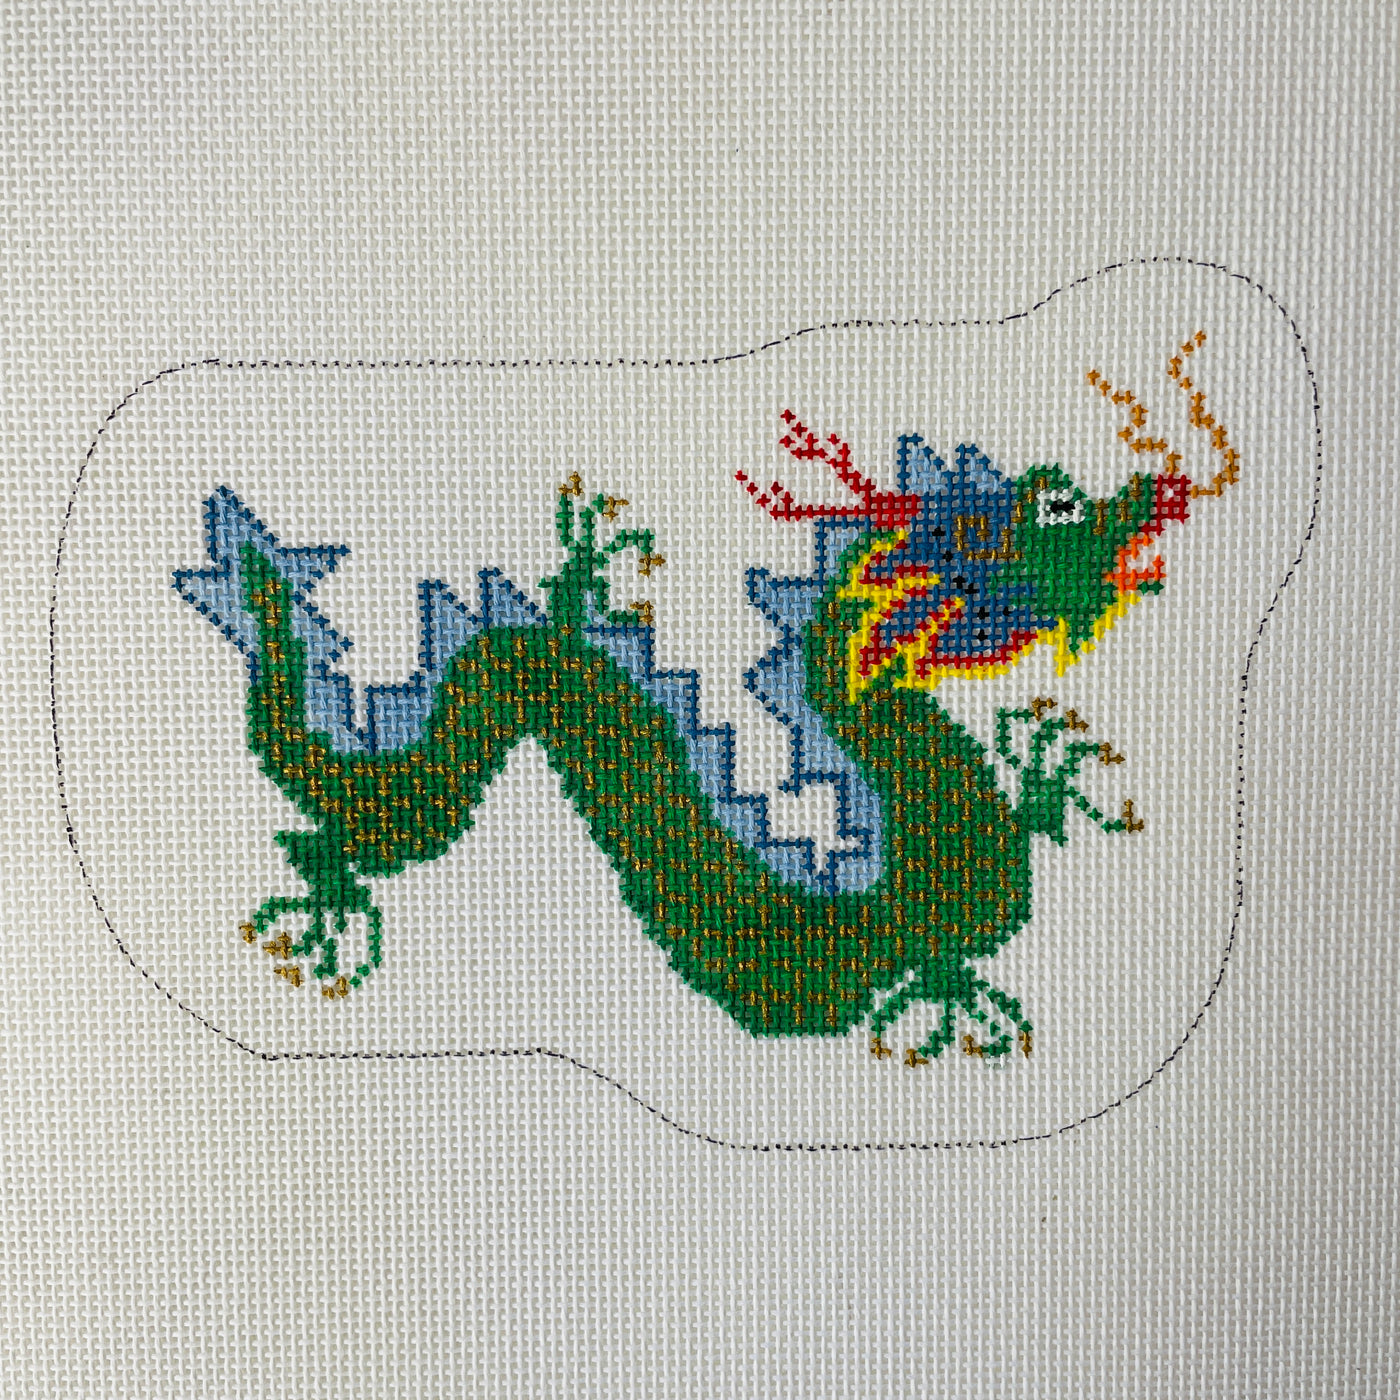 Green Dragon - Large Ornament Needlepoint Canvas